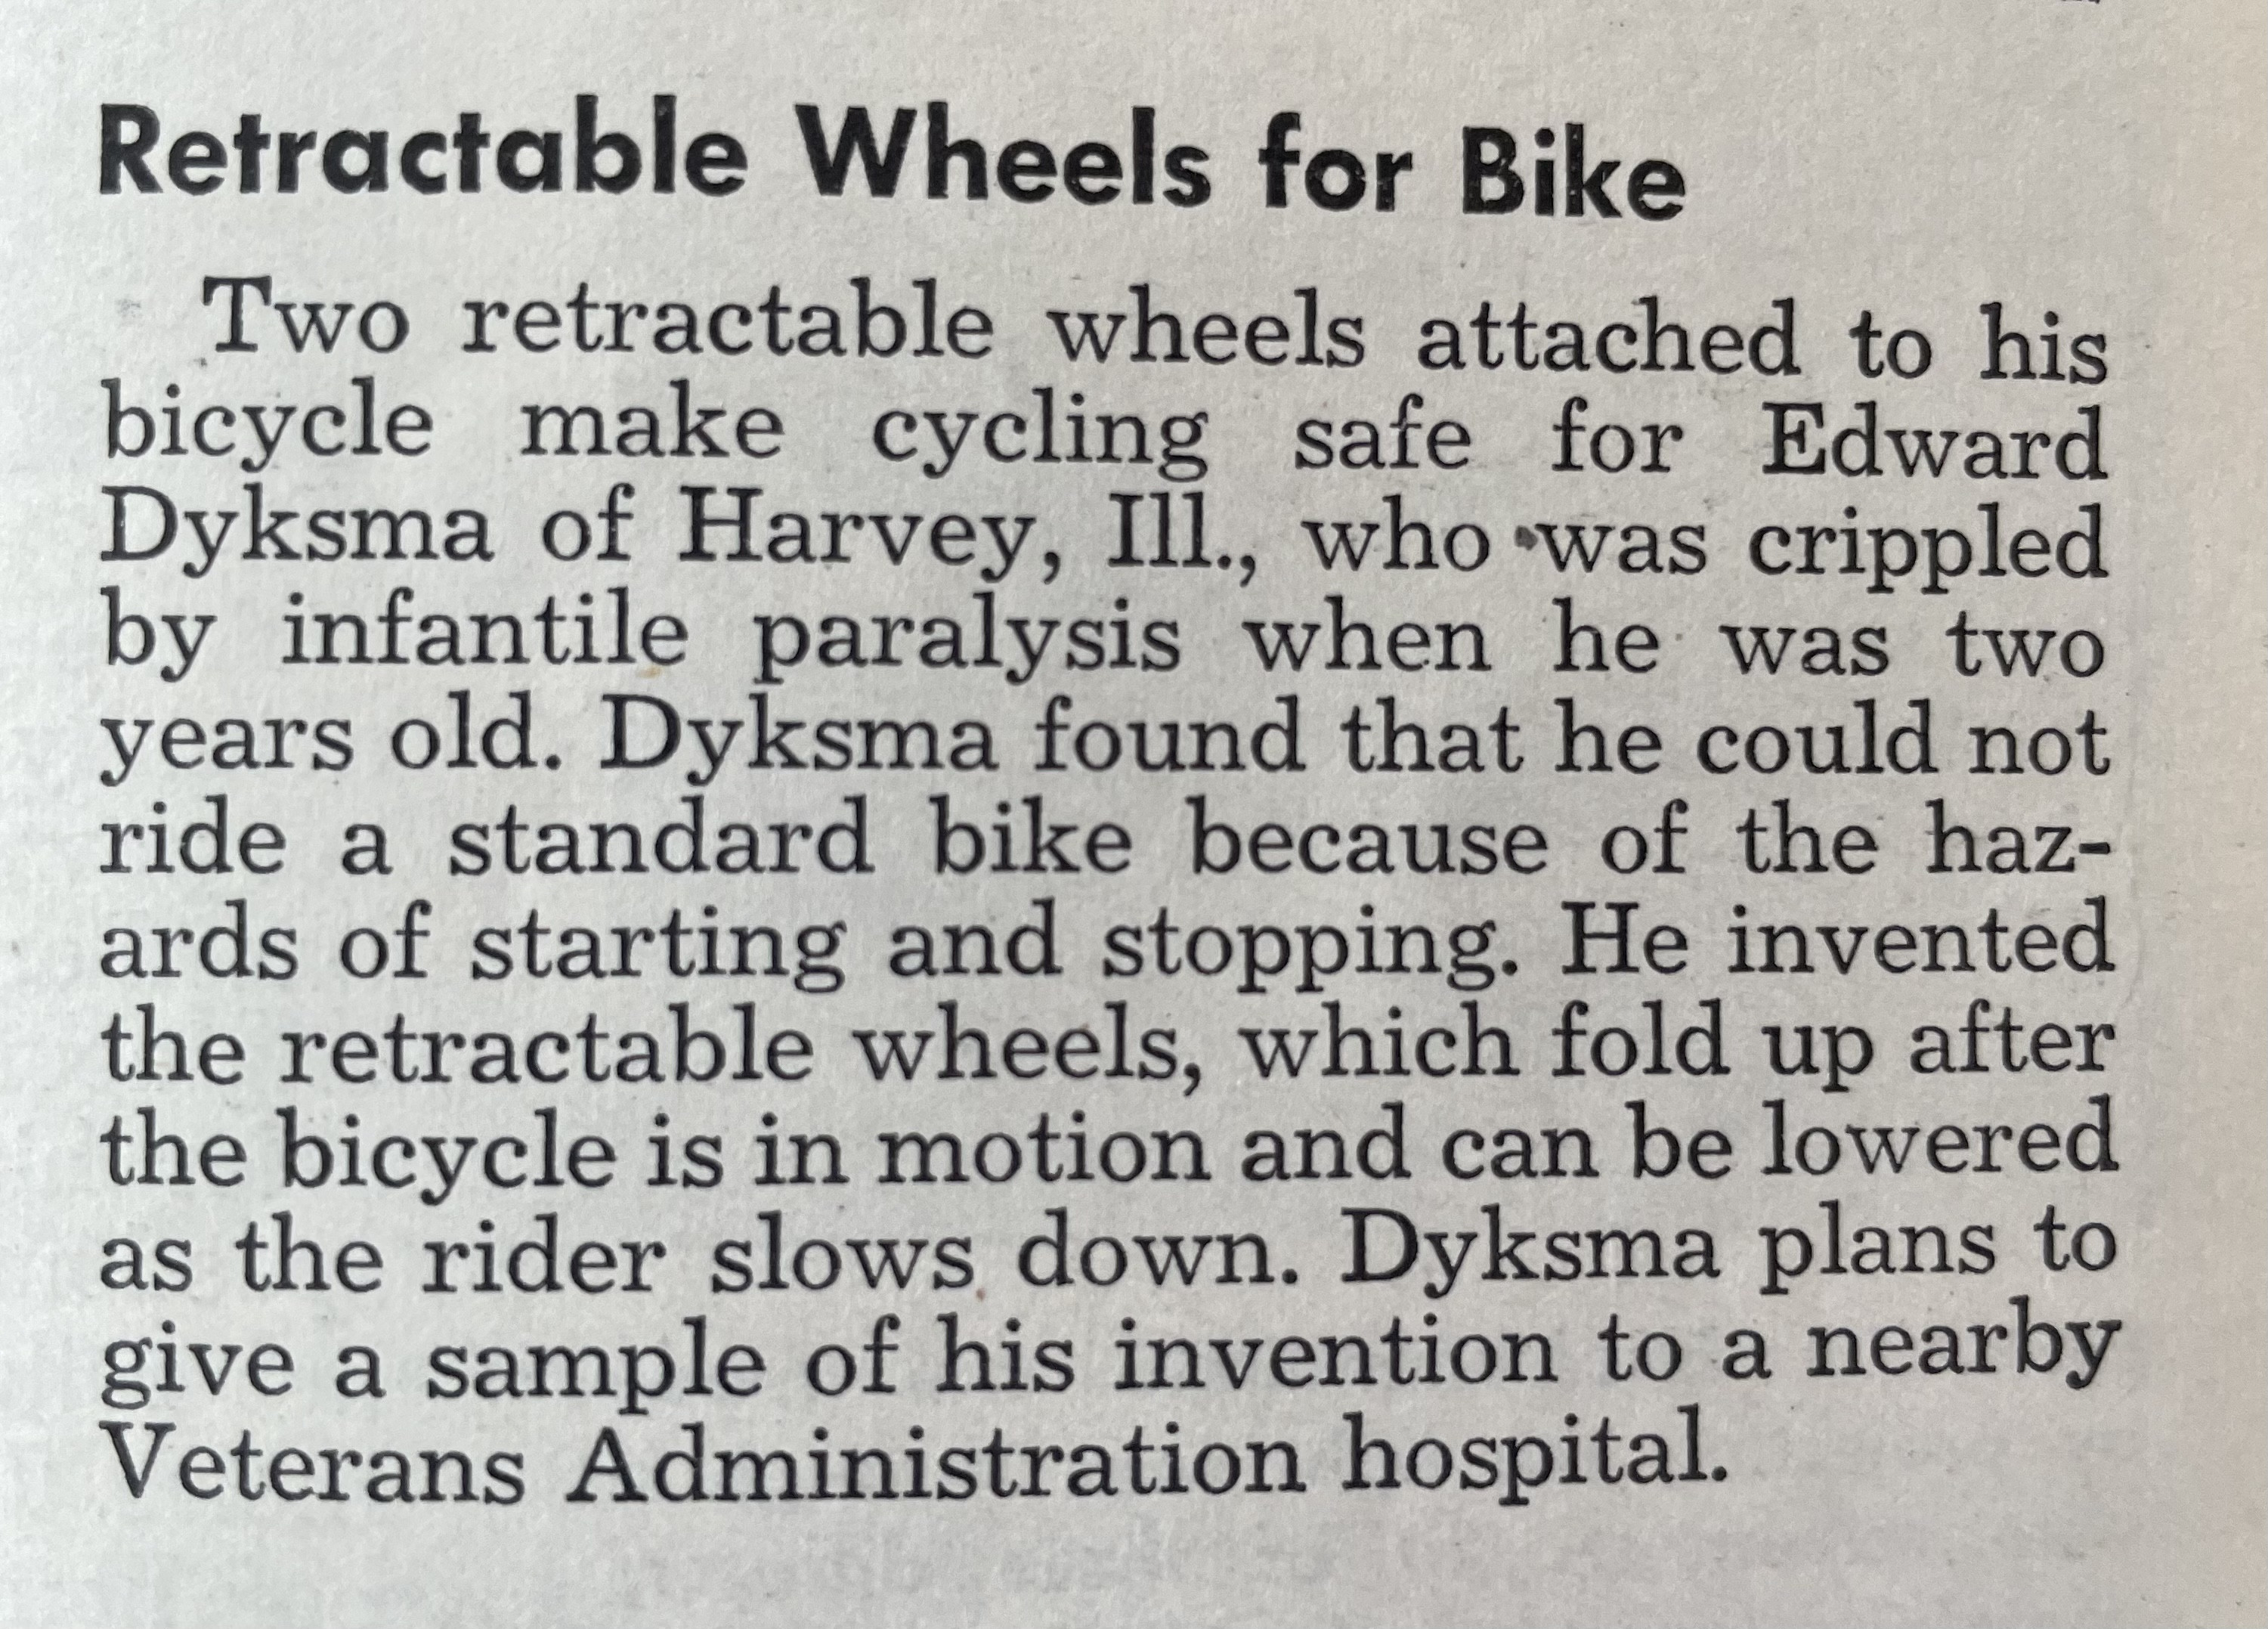 Popular Mechanics Magazine, May 1948 article